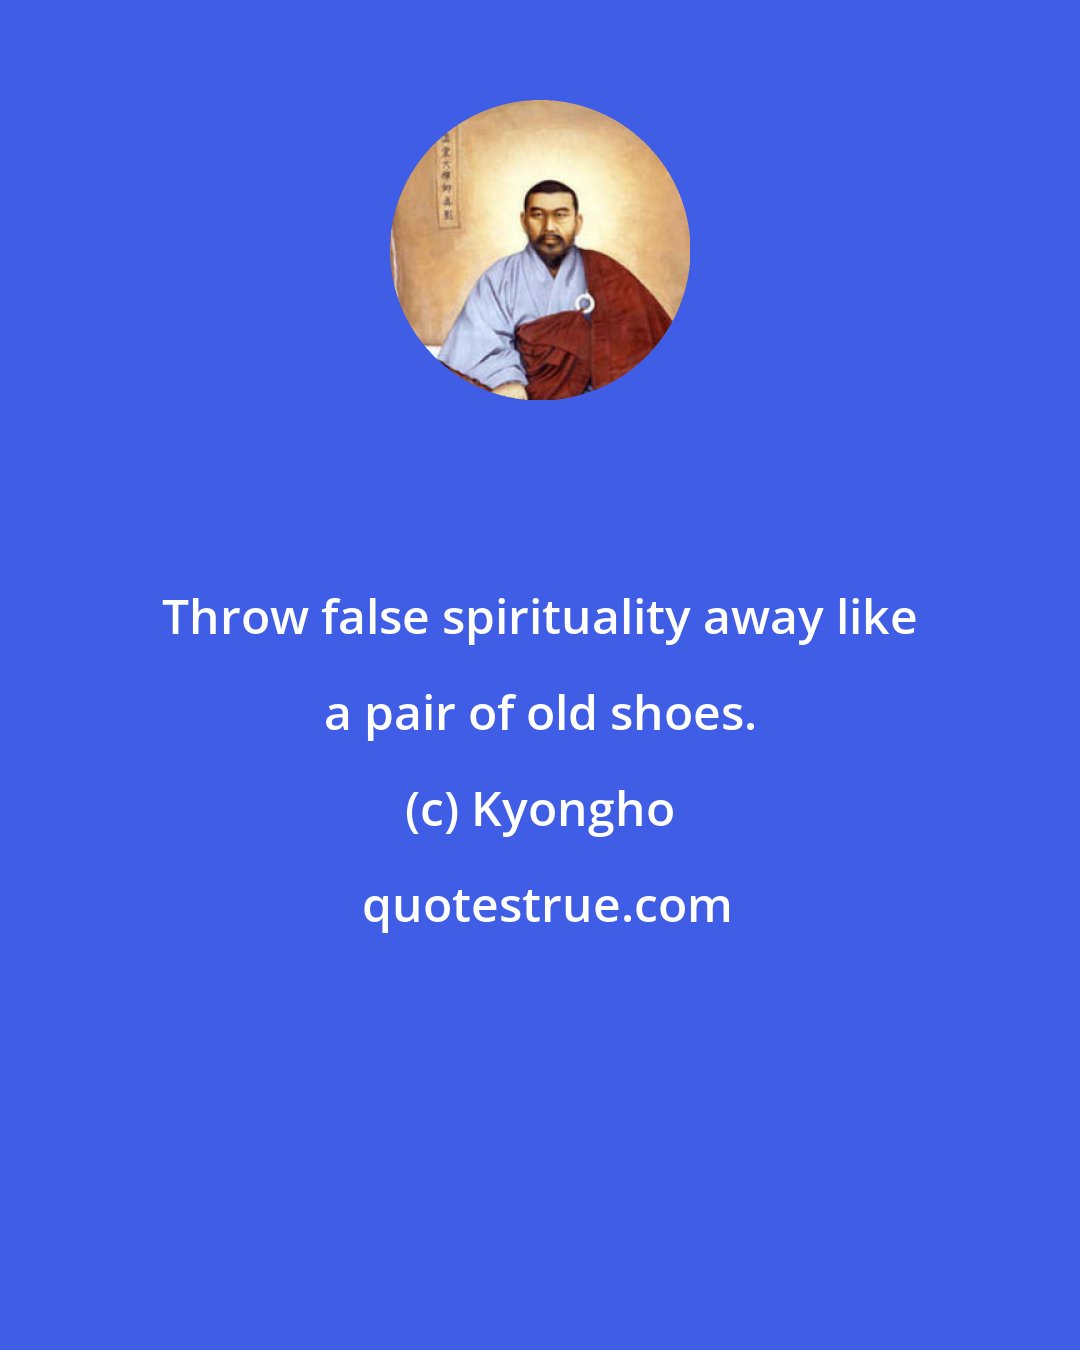 Kyongho: Throw false spirituality away like a pair of old shoes.